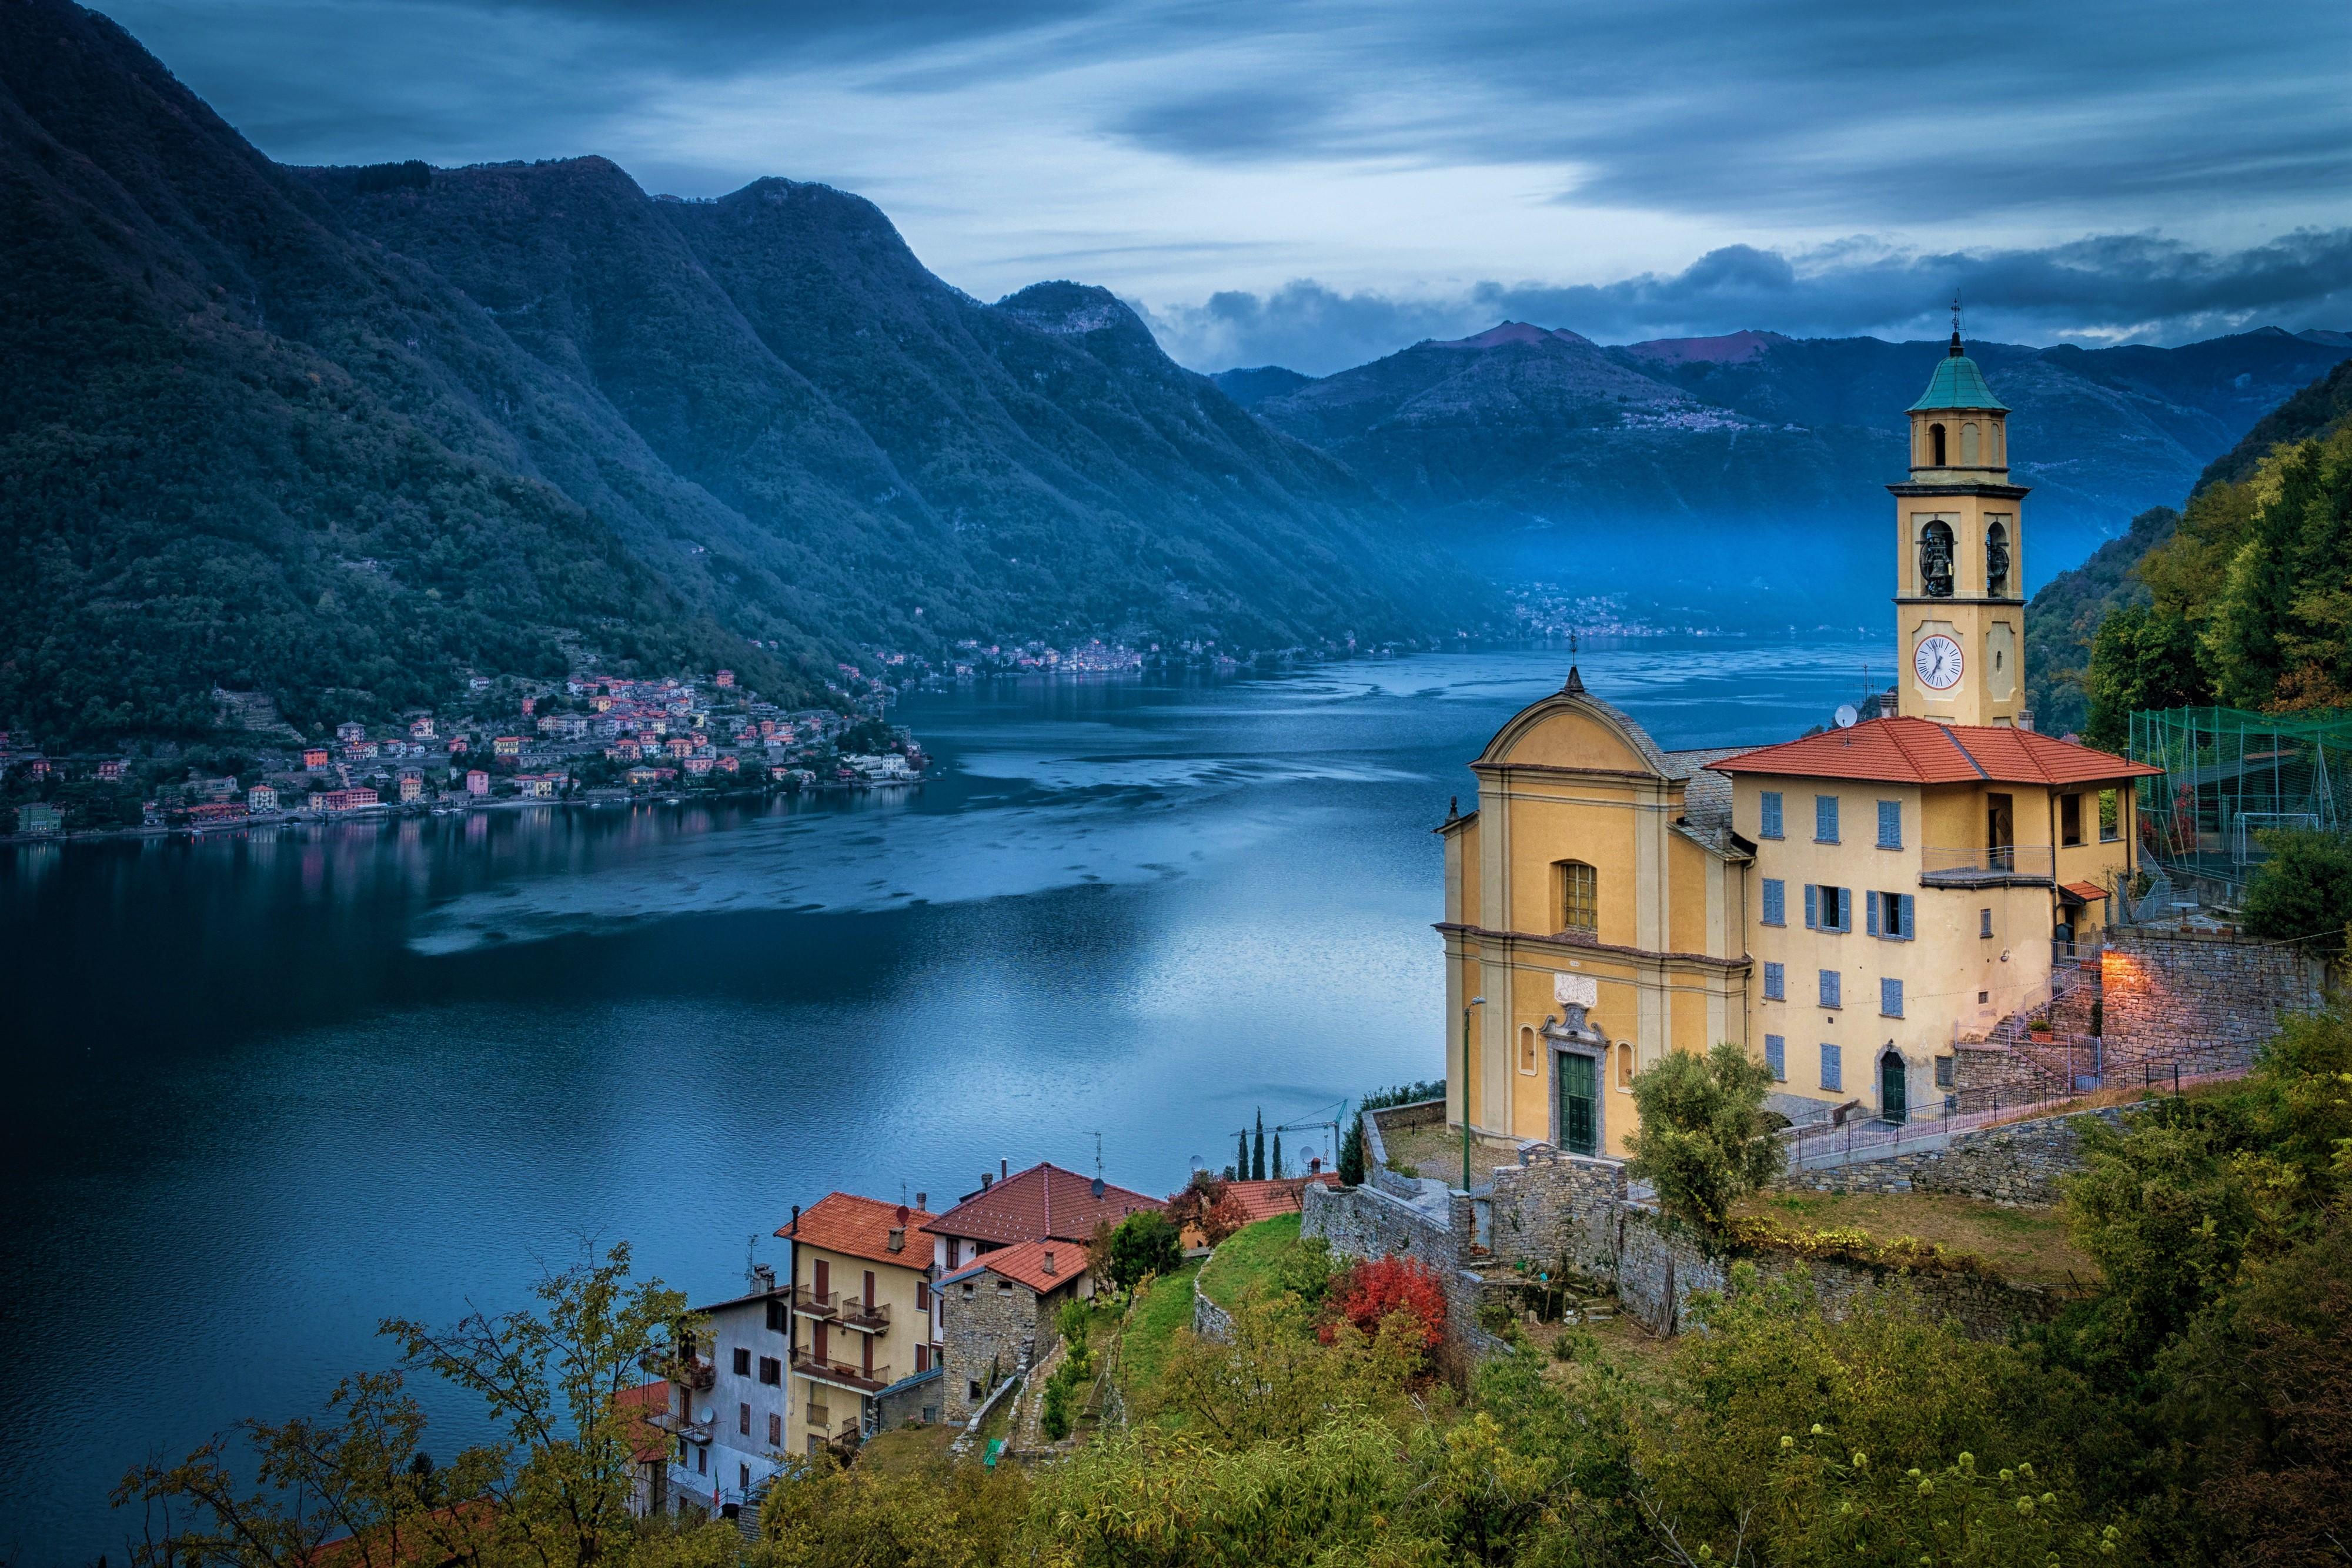 Lake Como, Italy 4k Ultra HD Wallpaper. Background Image